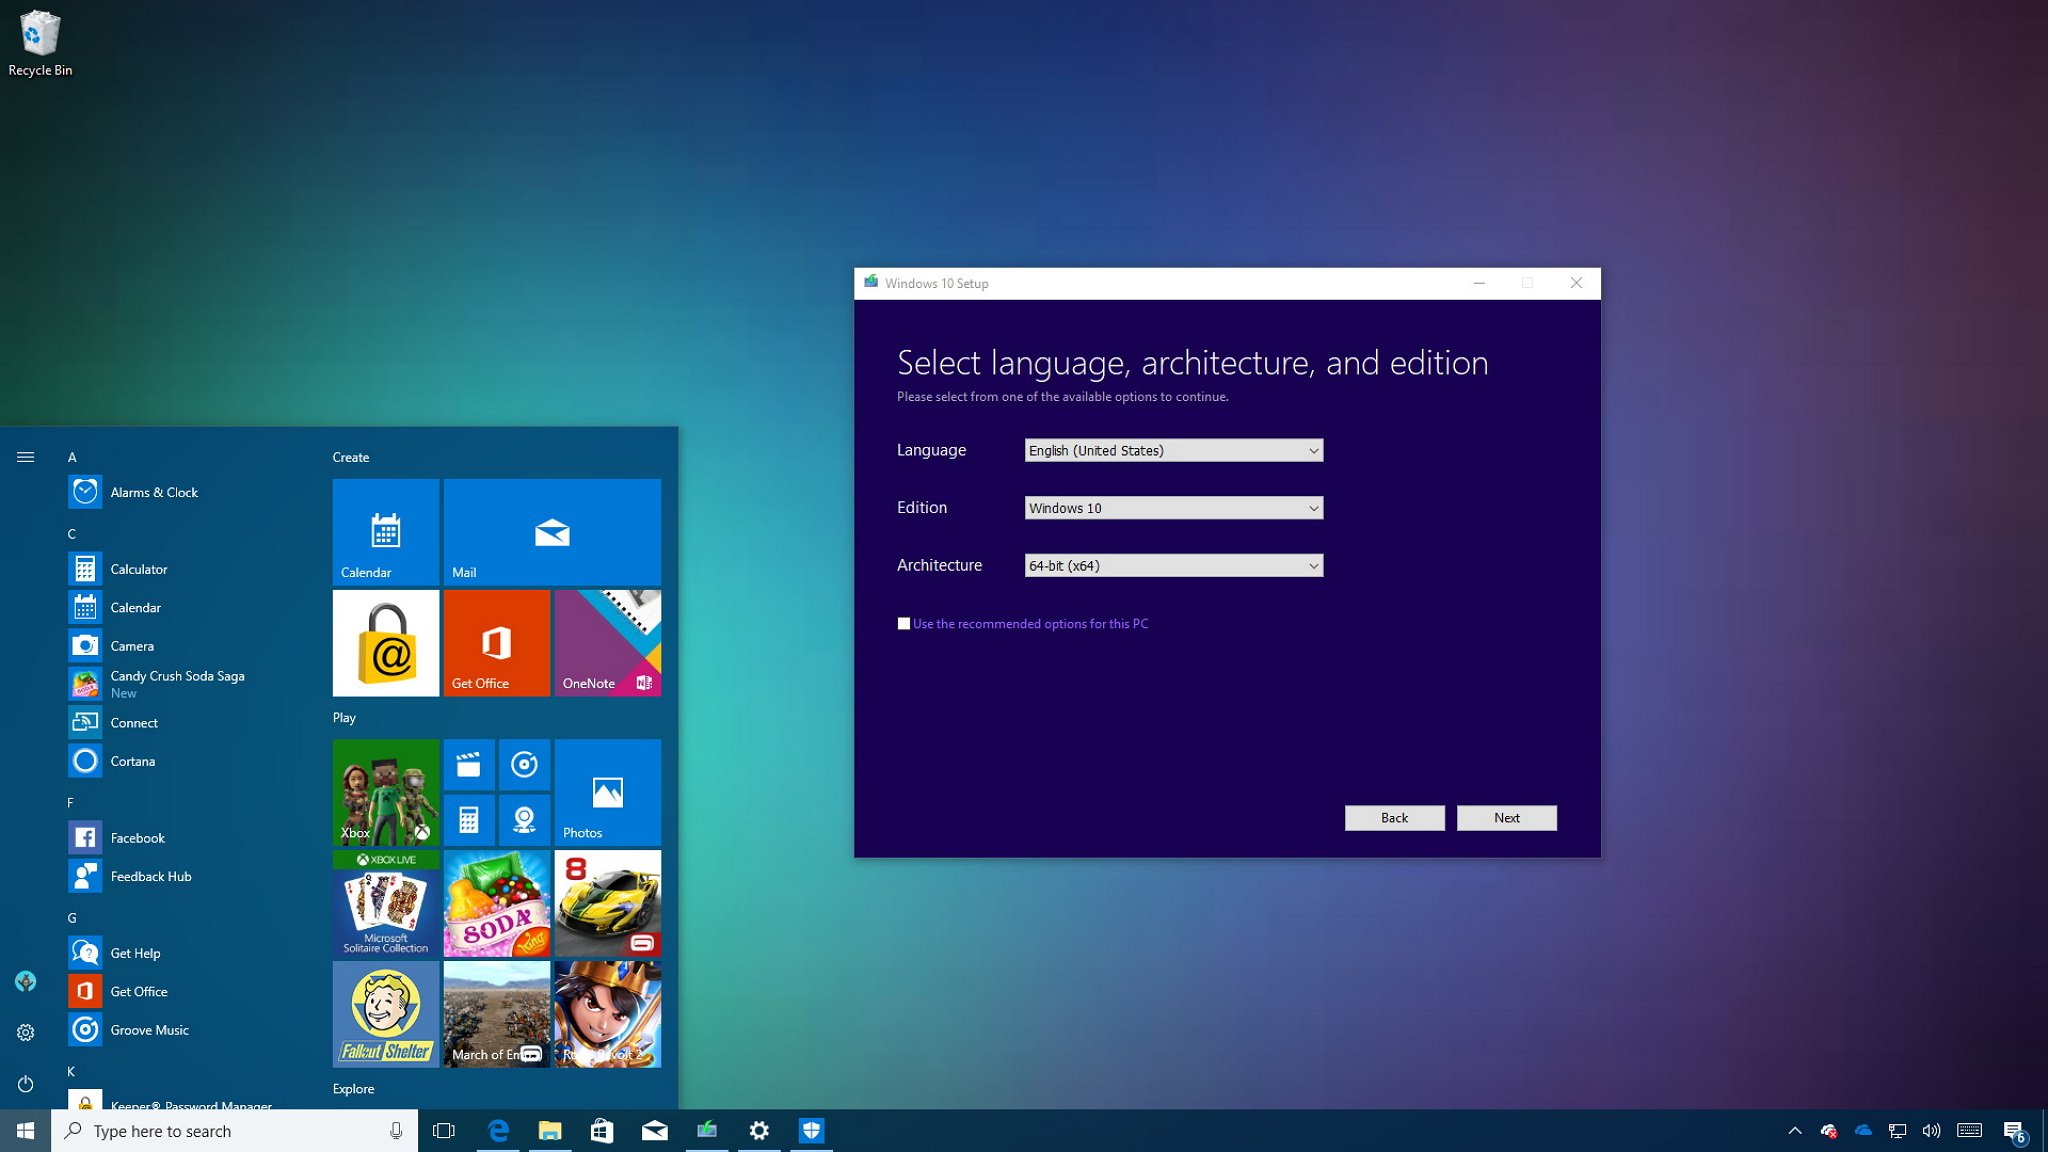 Windows 10 clean install